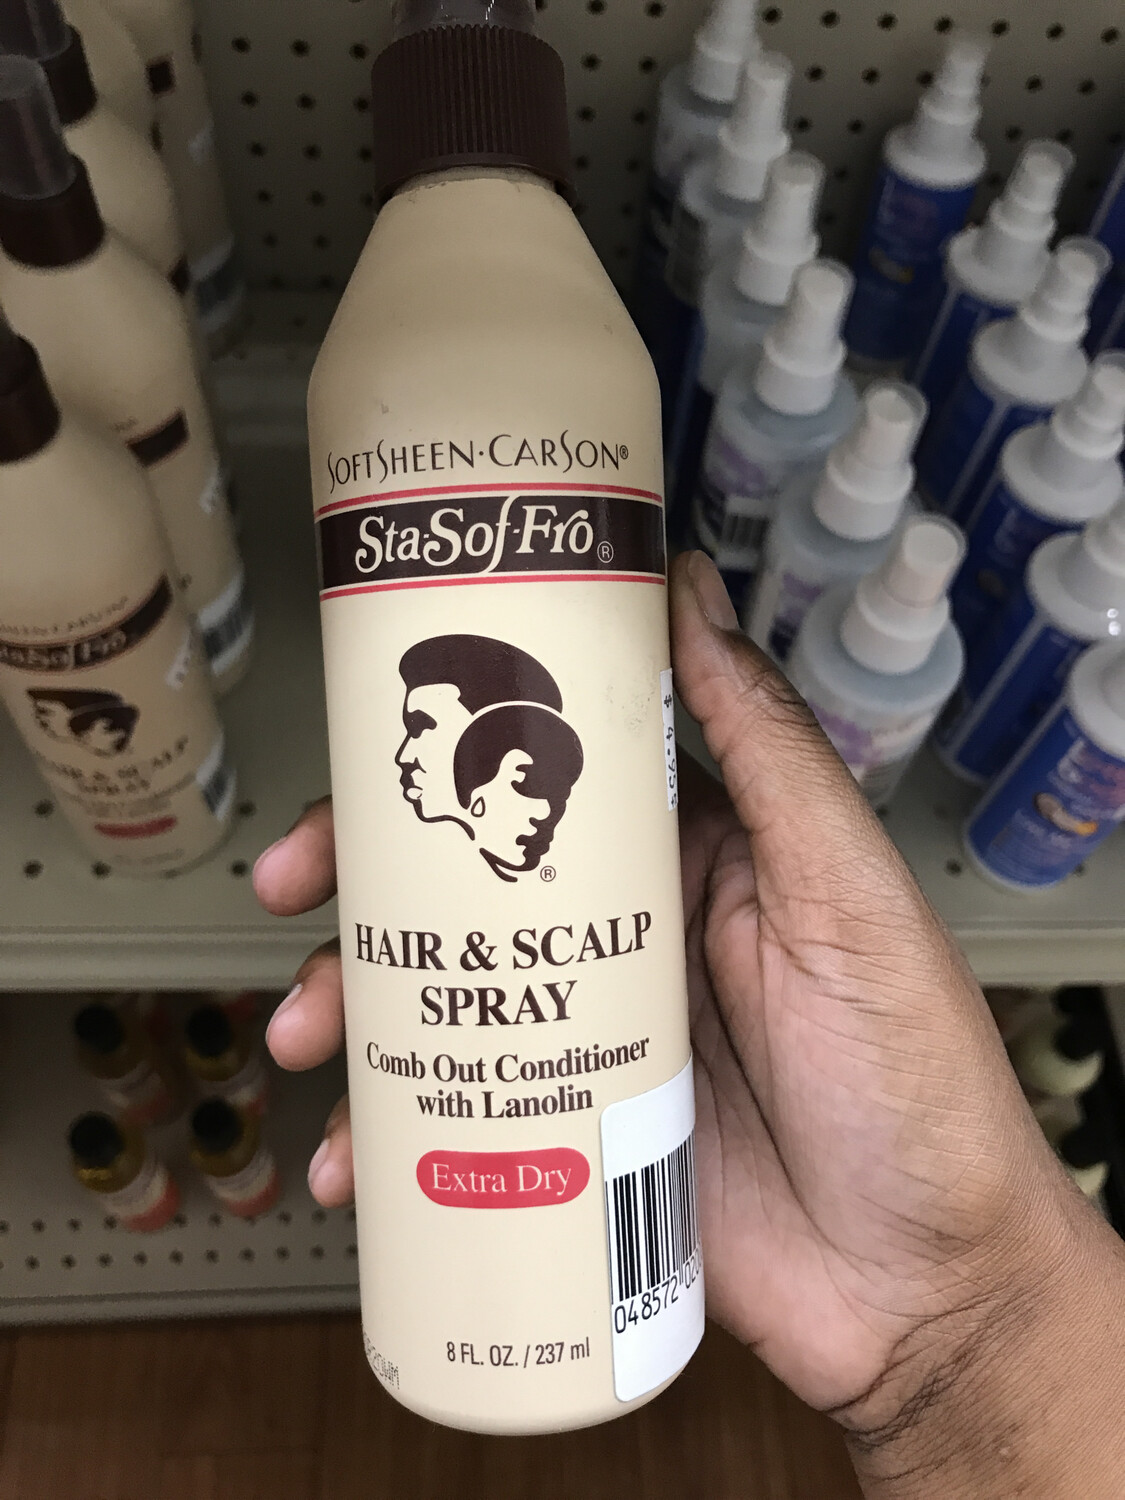 SSFhair & Scalp Spray 8 Oz.